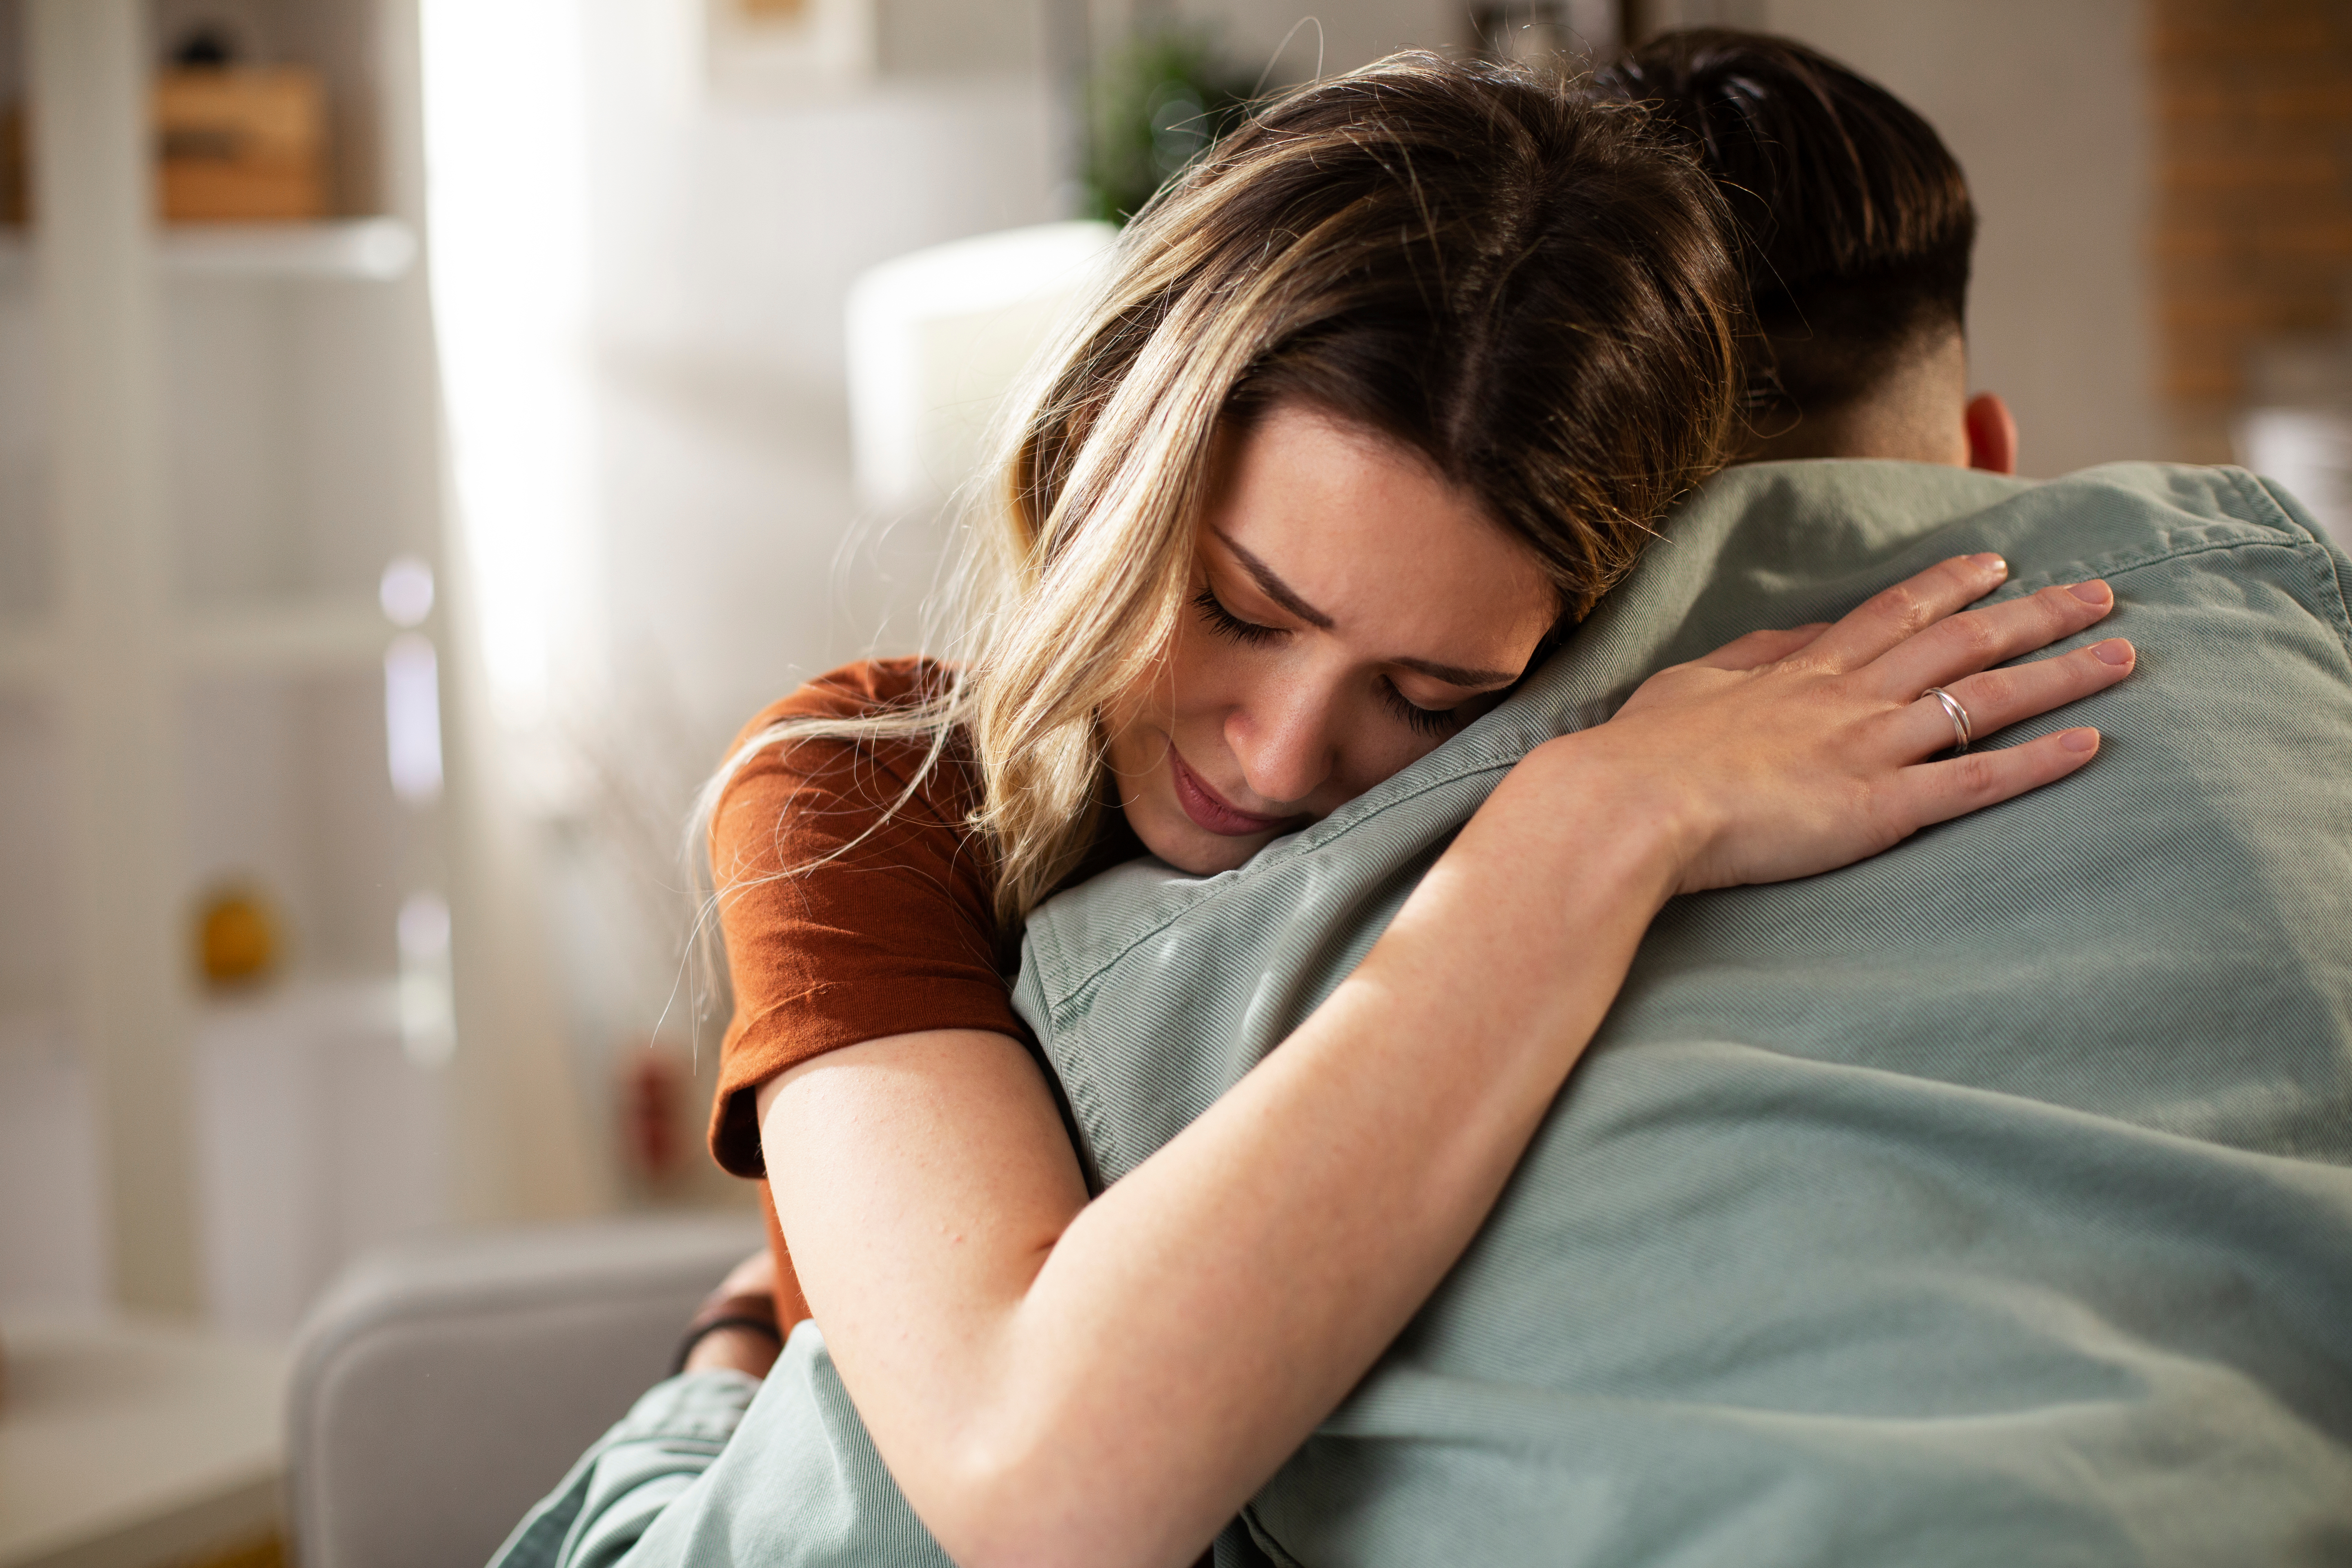 Man comforting his wife. | Source: Shutterstock